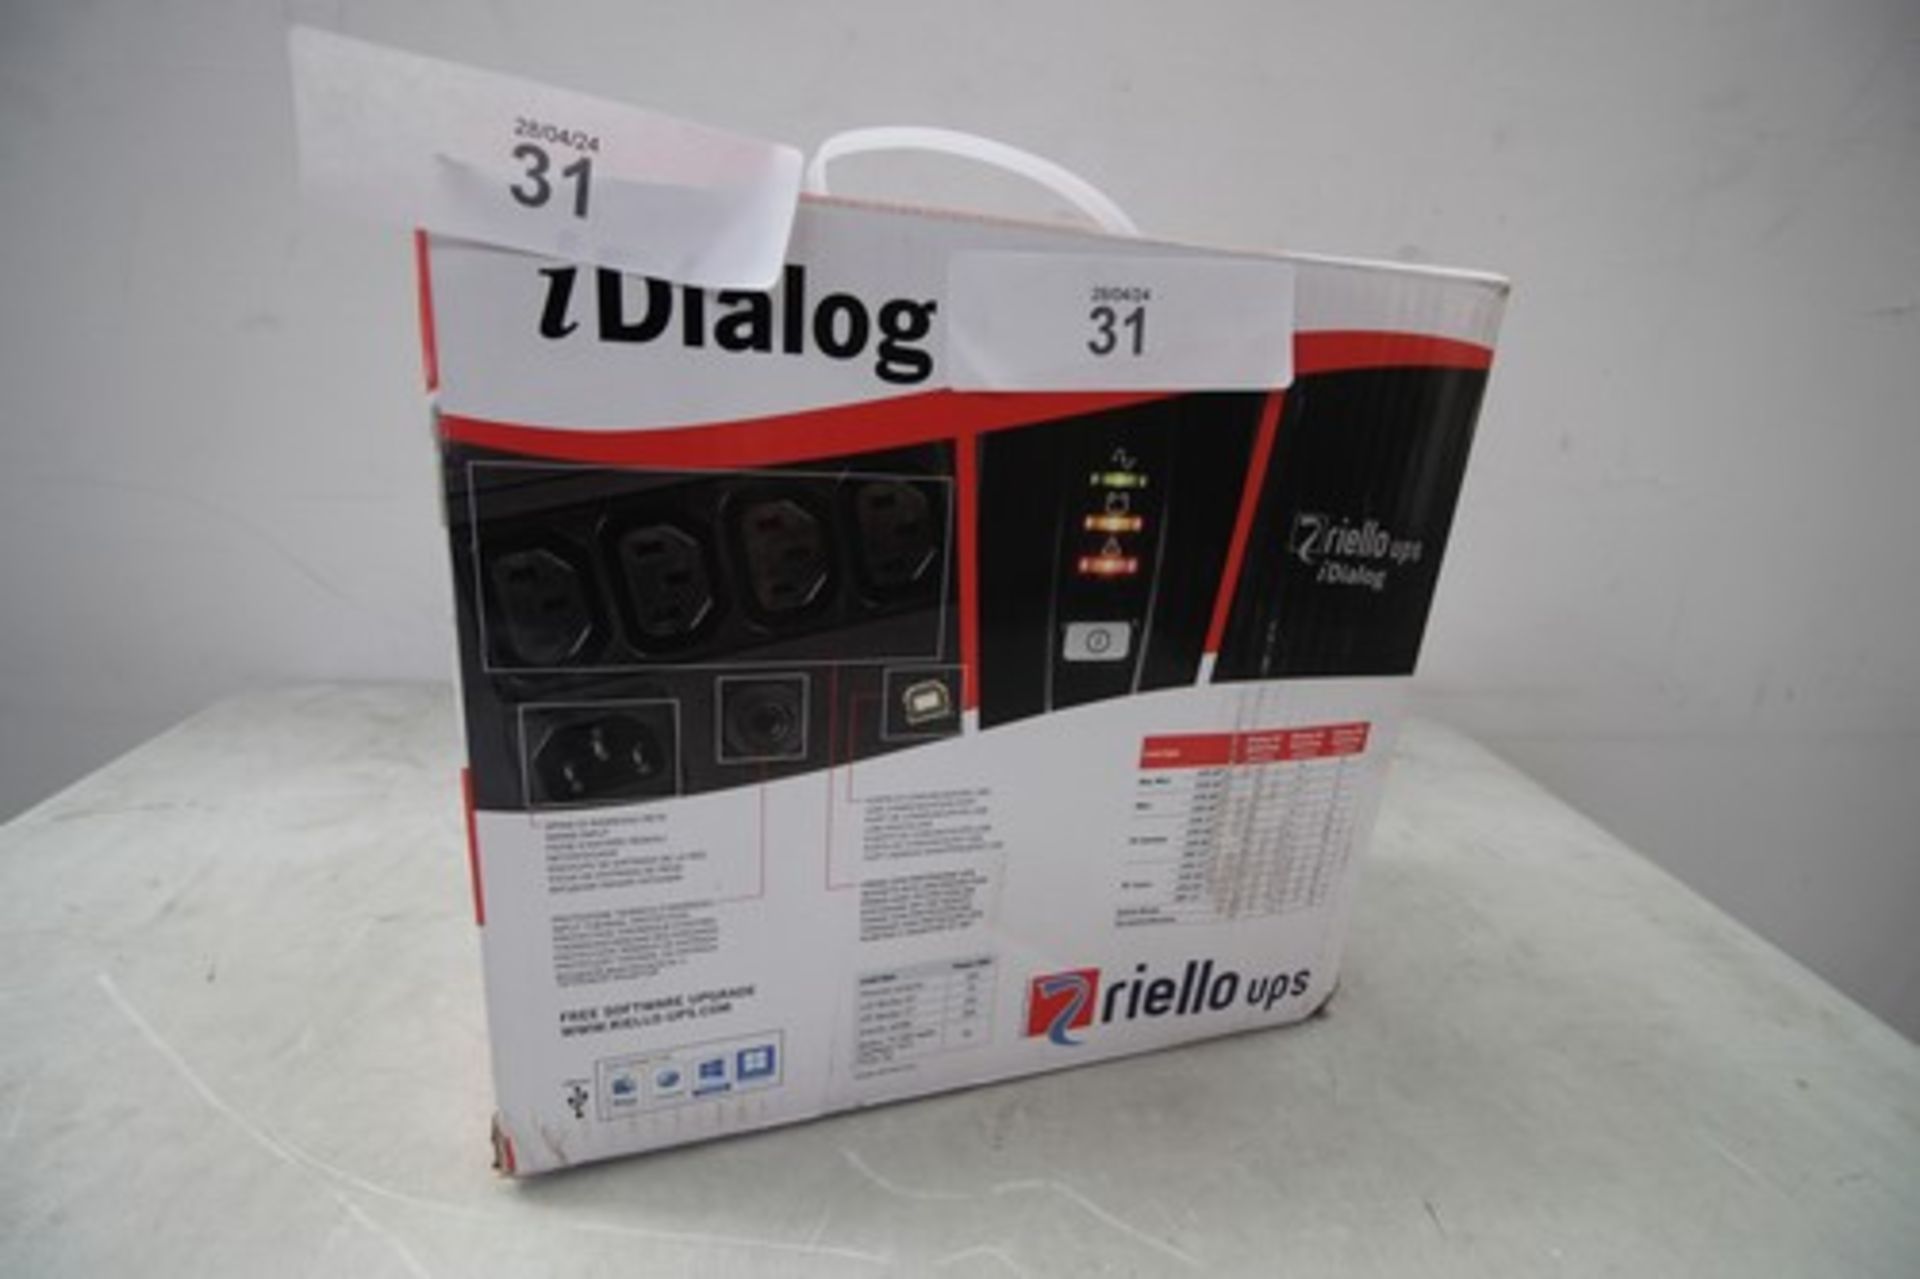 1 x Riello I Dialog 600va uninterruptible power supply, model: IDG600, power on, not fully - Image 2 of 2